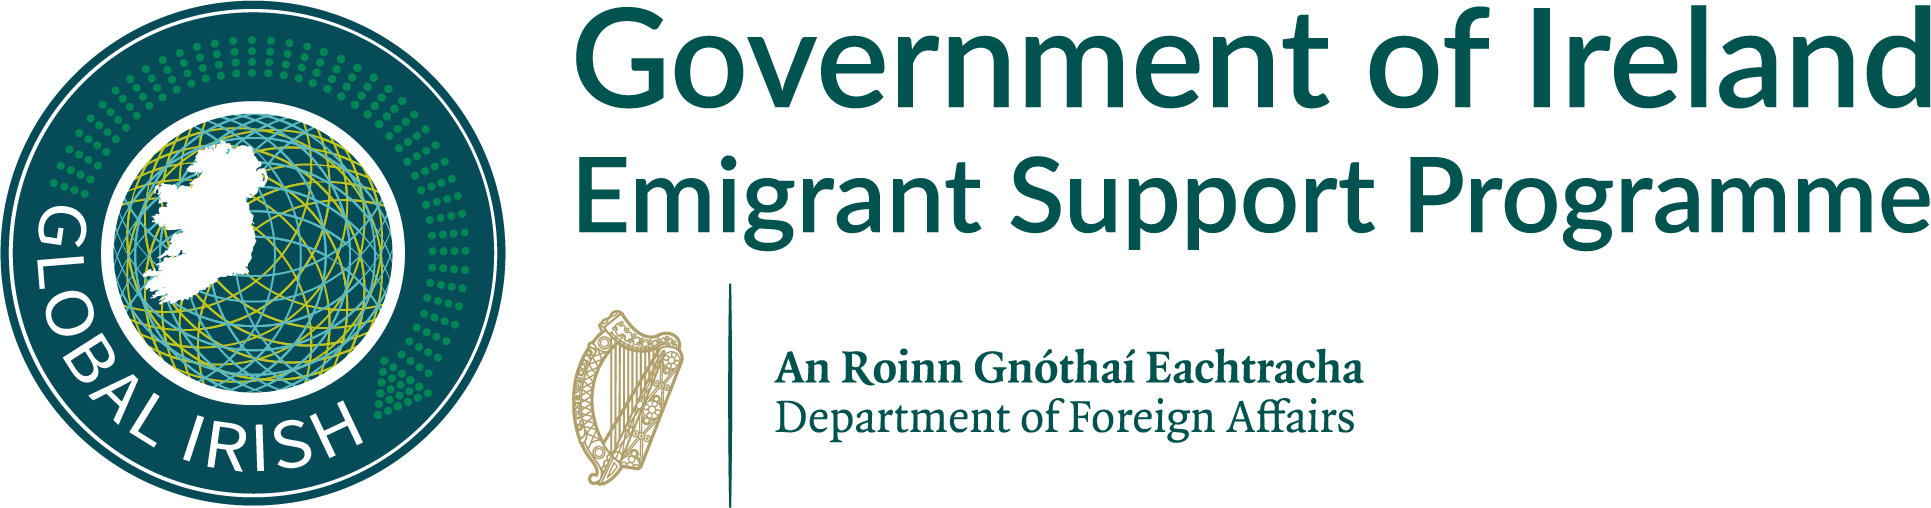 Emigrant Support Programme logo